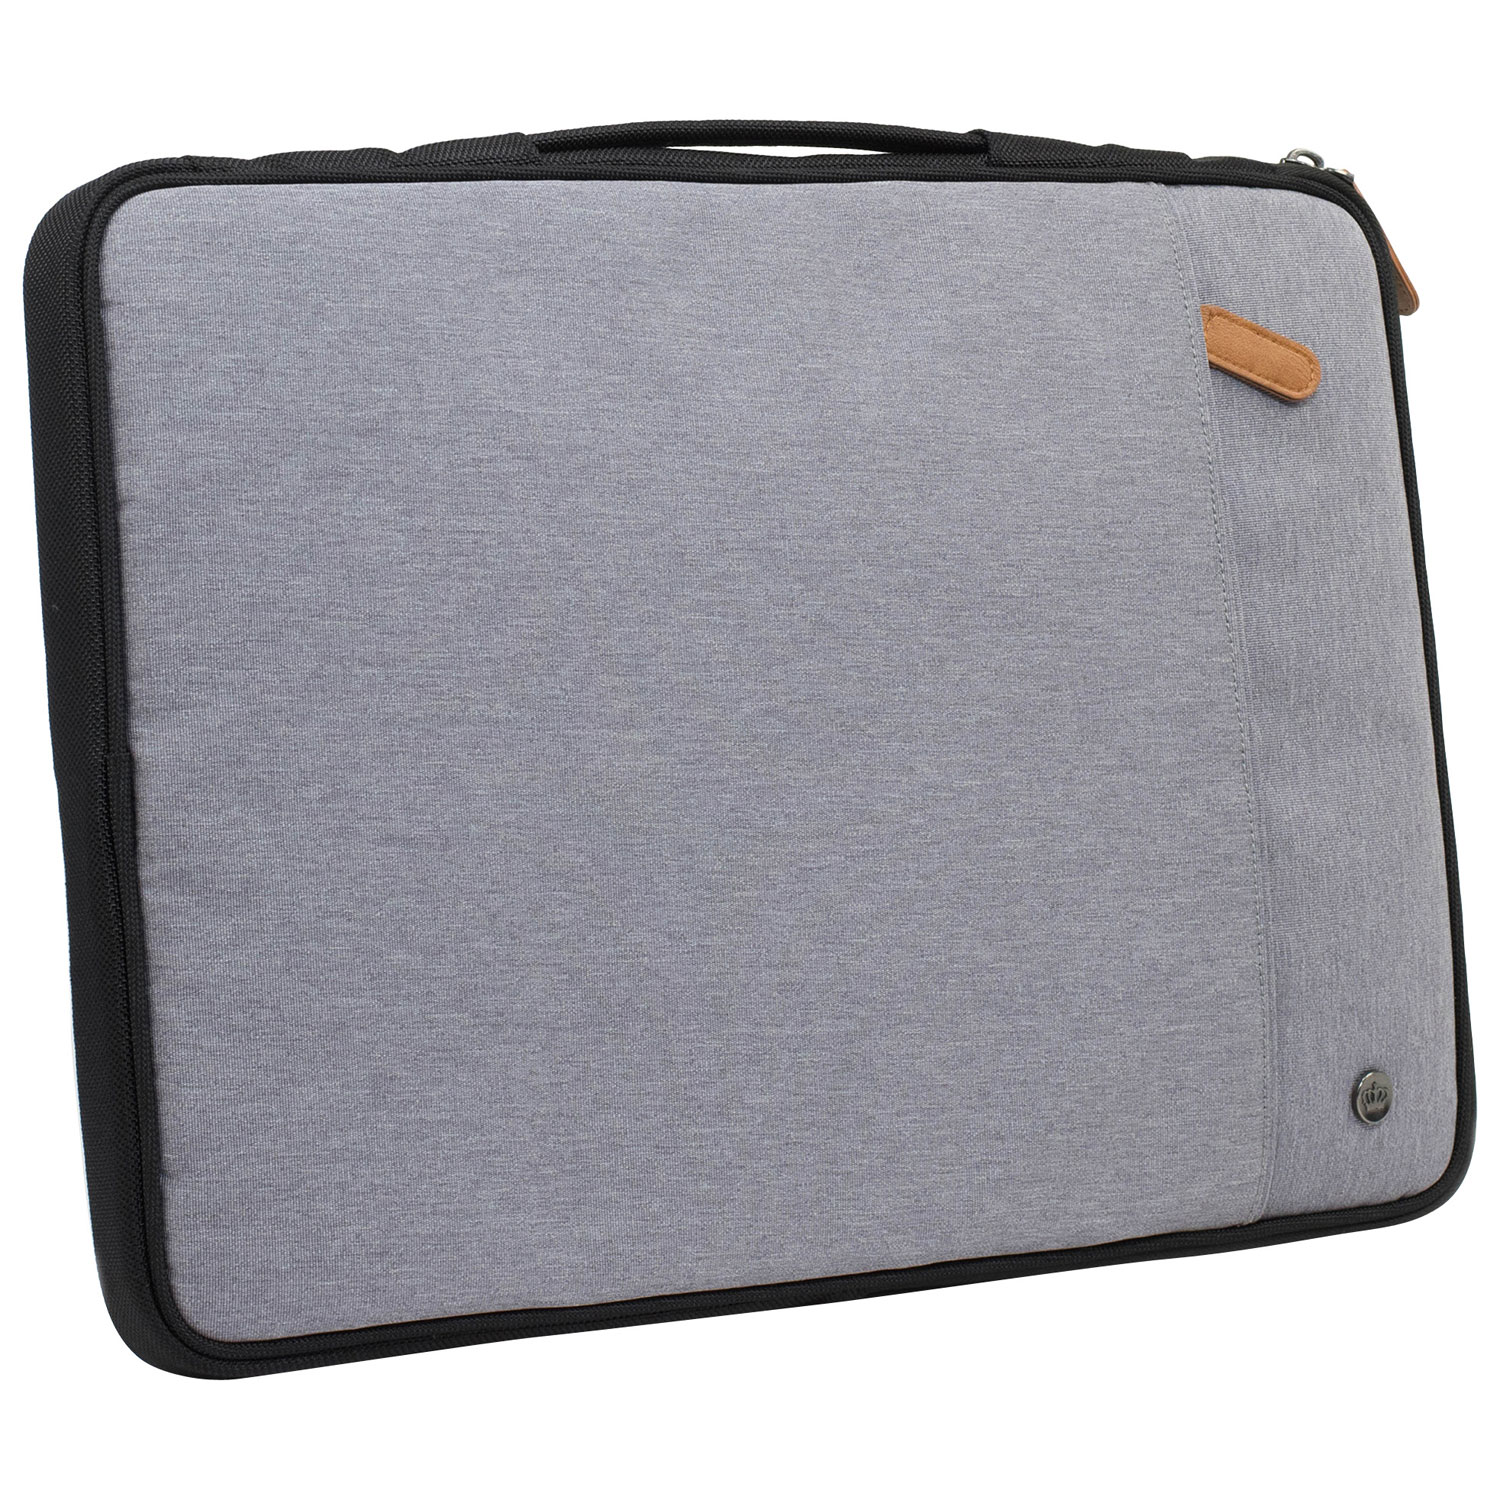 PKG 16 Laptop Sleeve - Light Grey